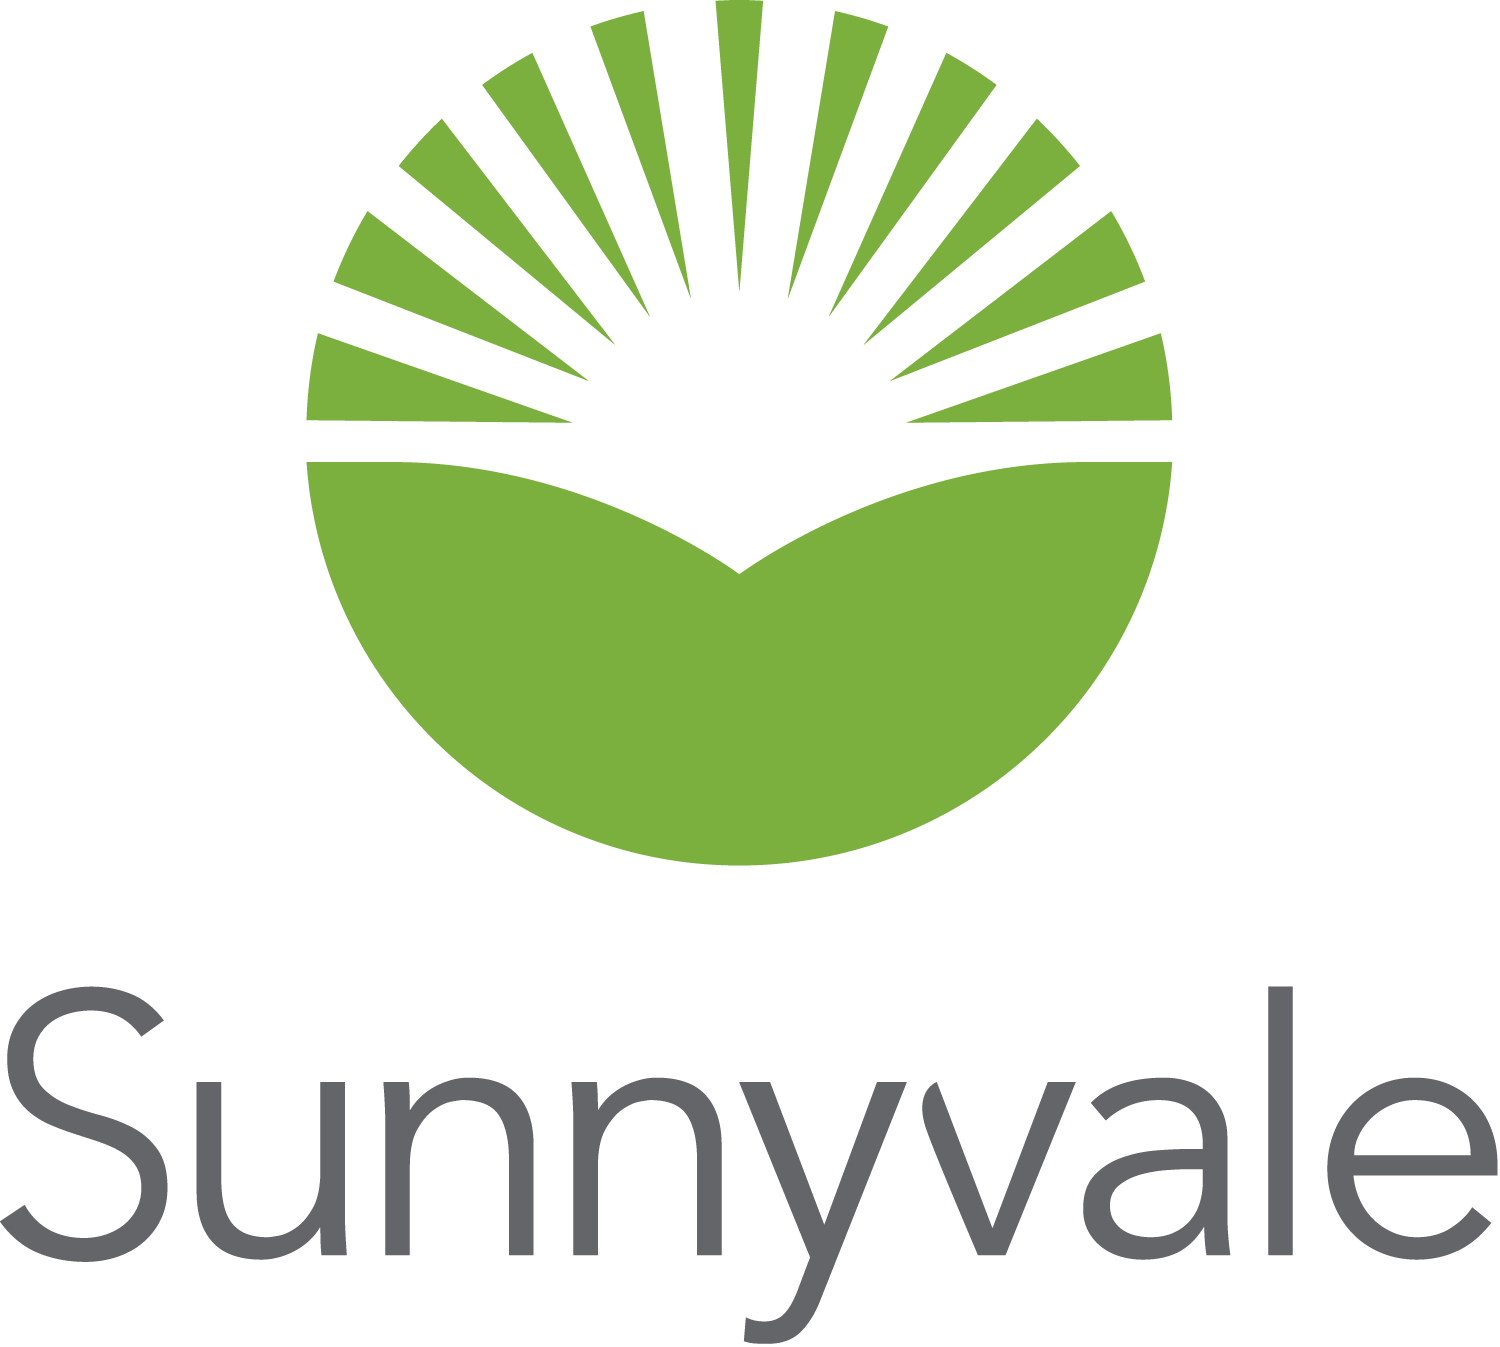 City of Sunnyvale California Logo